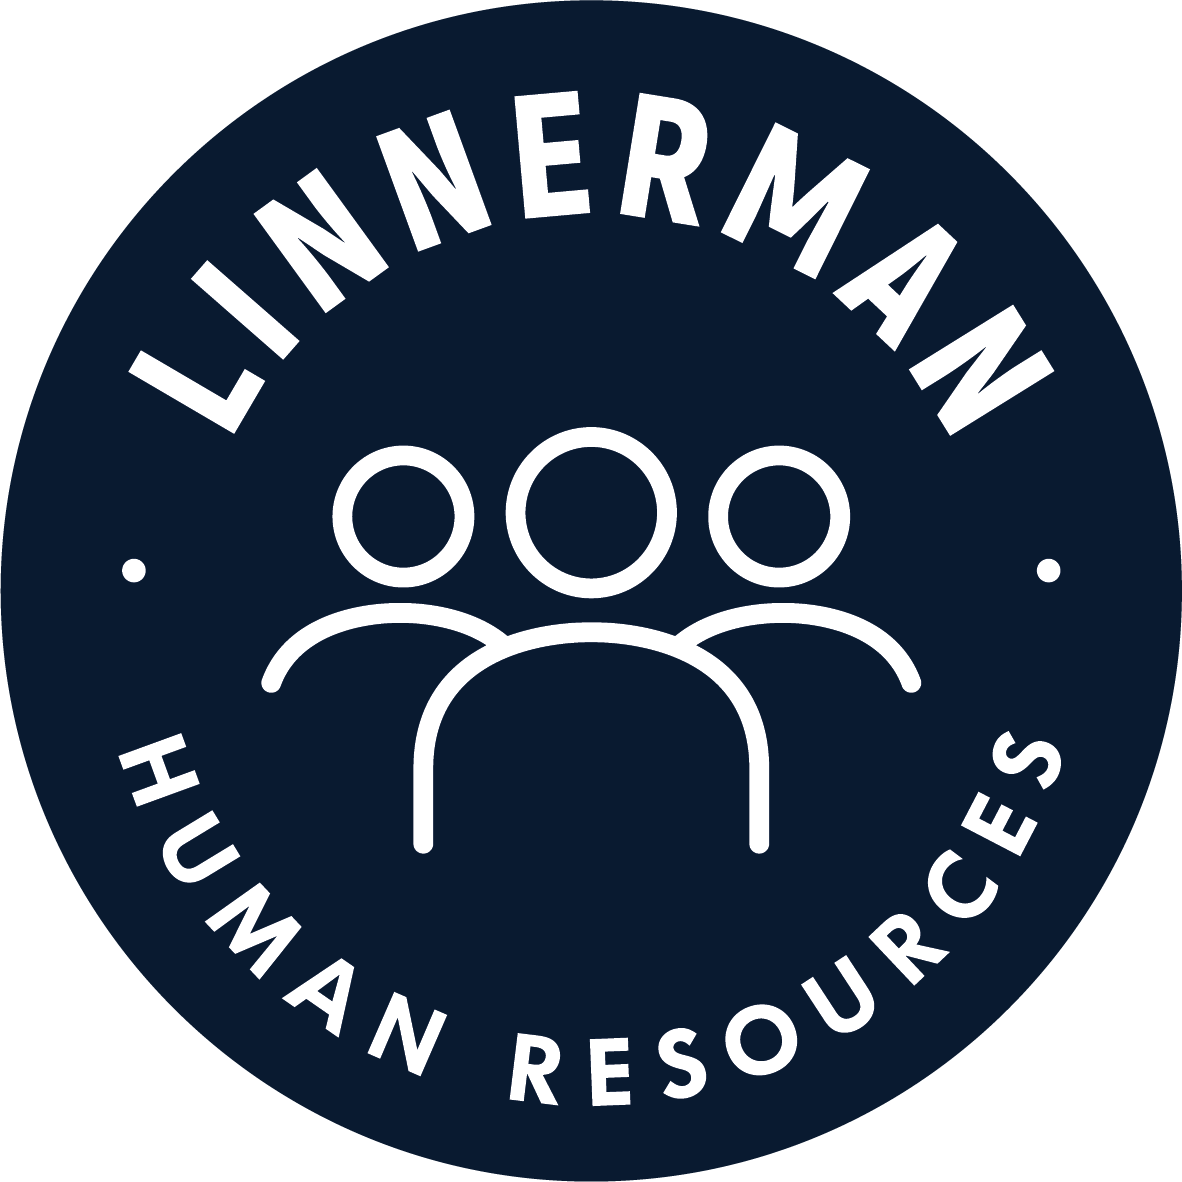 Linnerman HR